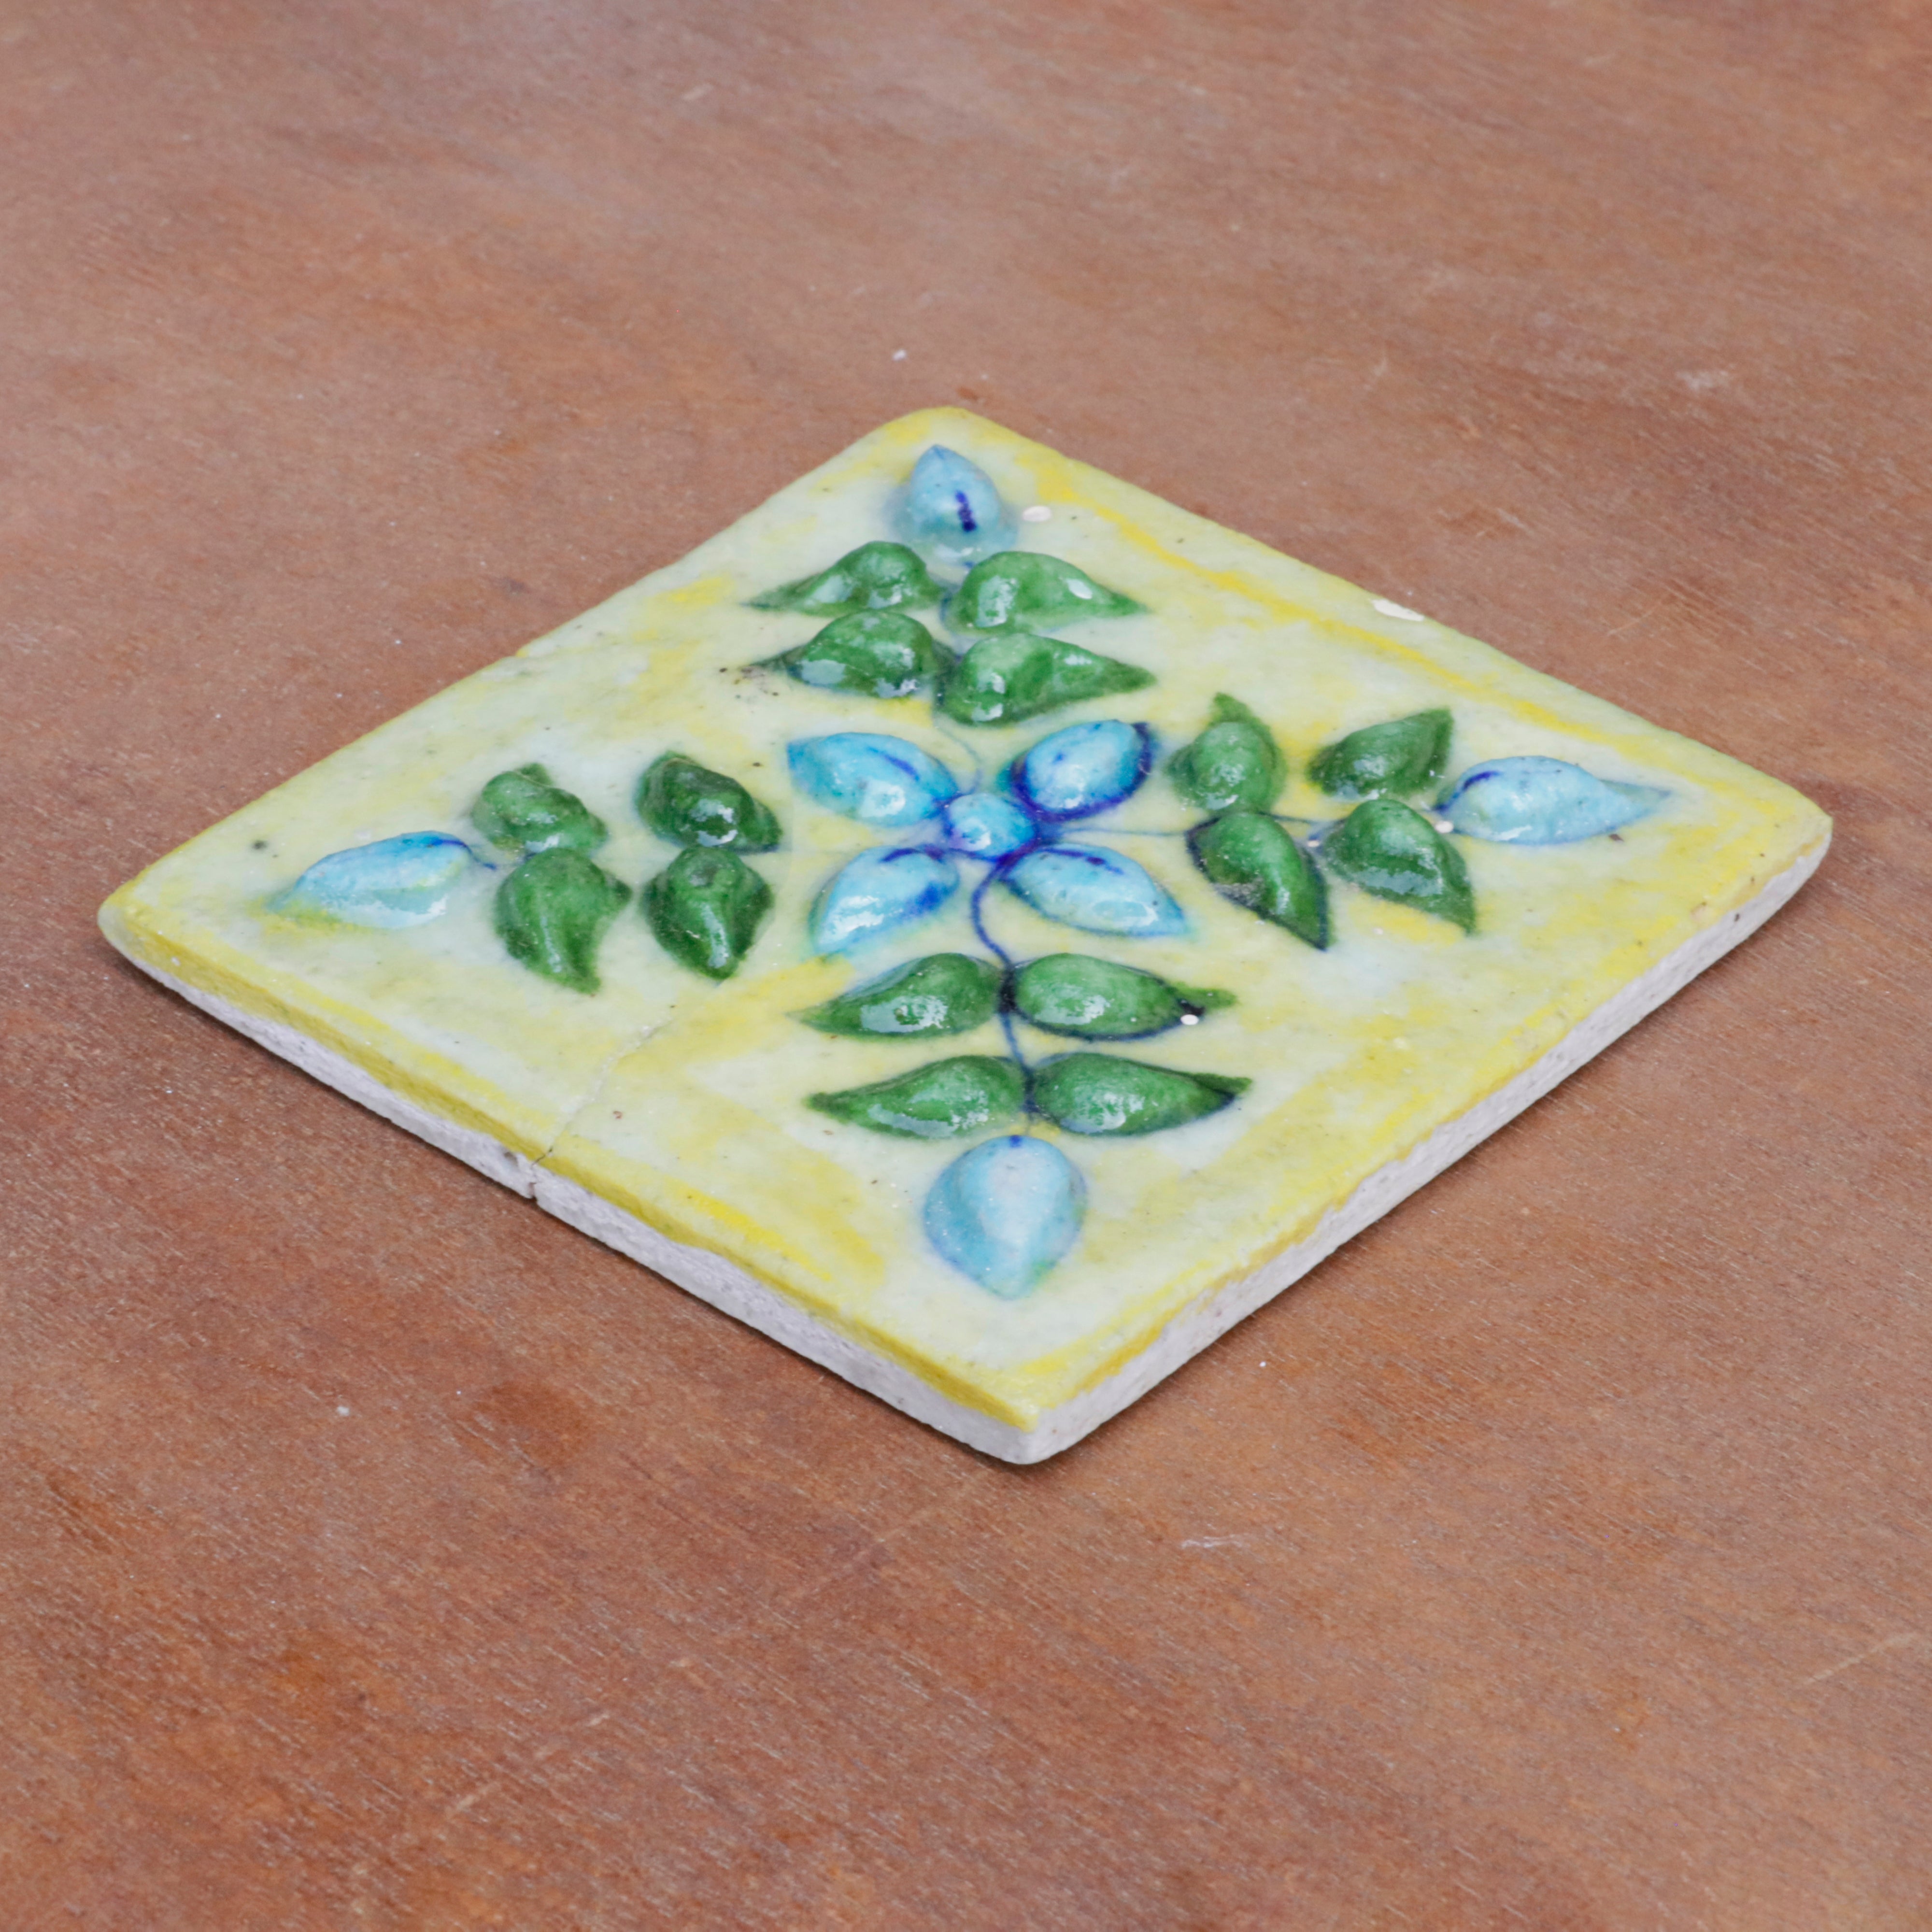 Evergreen Rich Embossed Flowered Designed Ceramic Square Tile Set of 2 Ceramic Tile